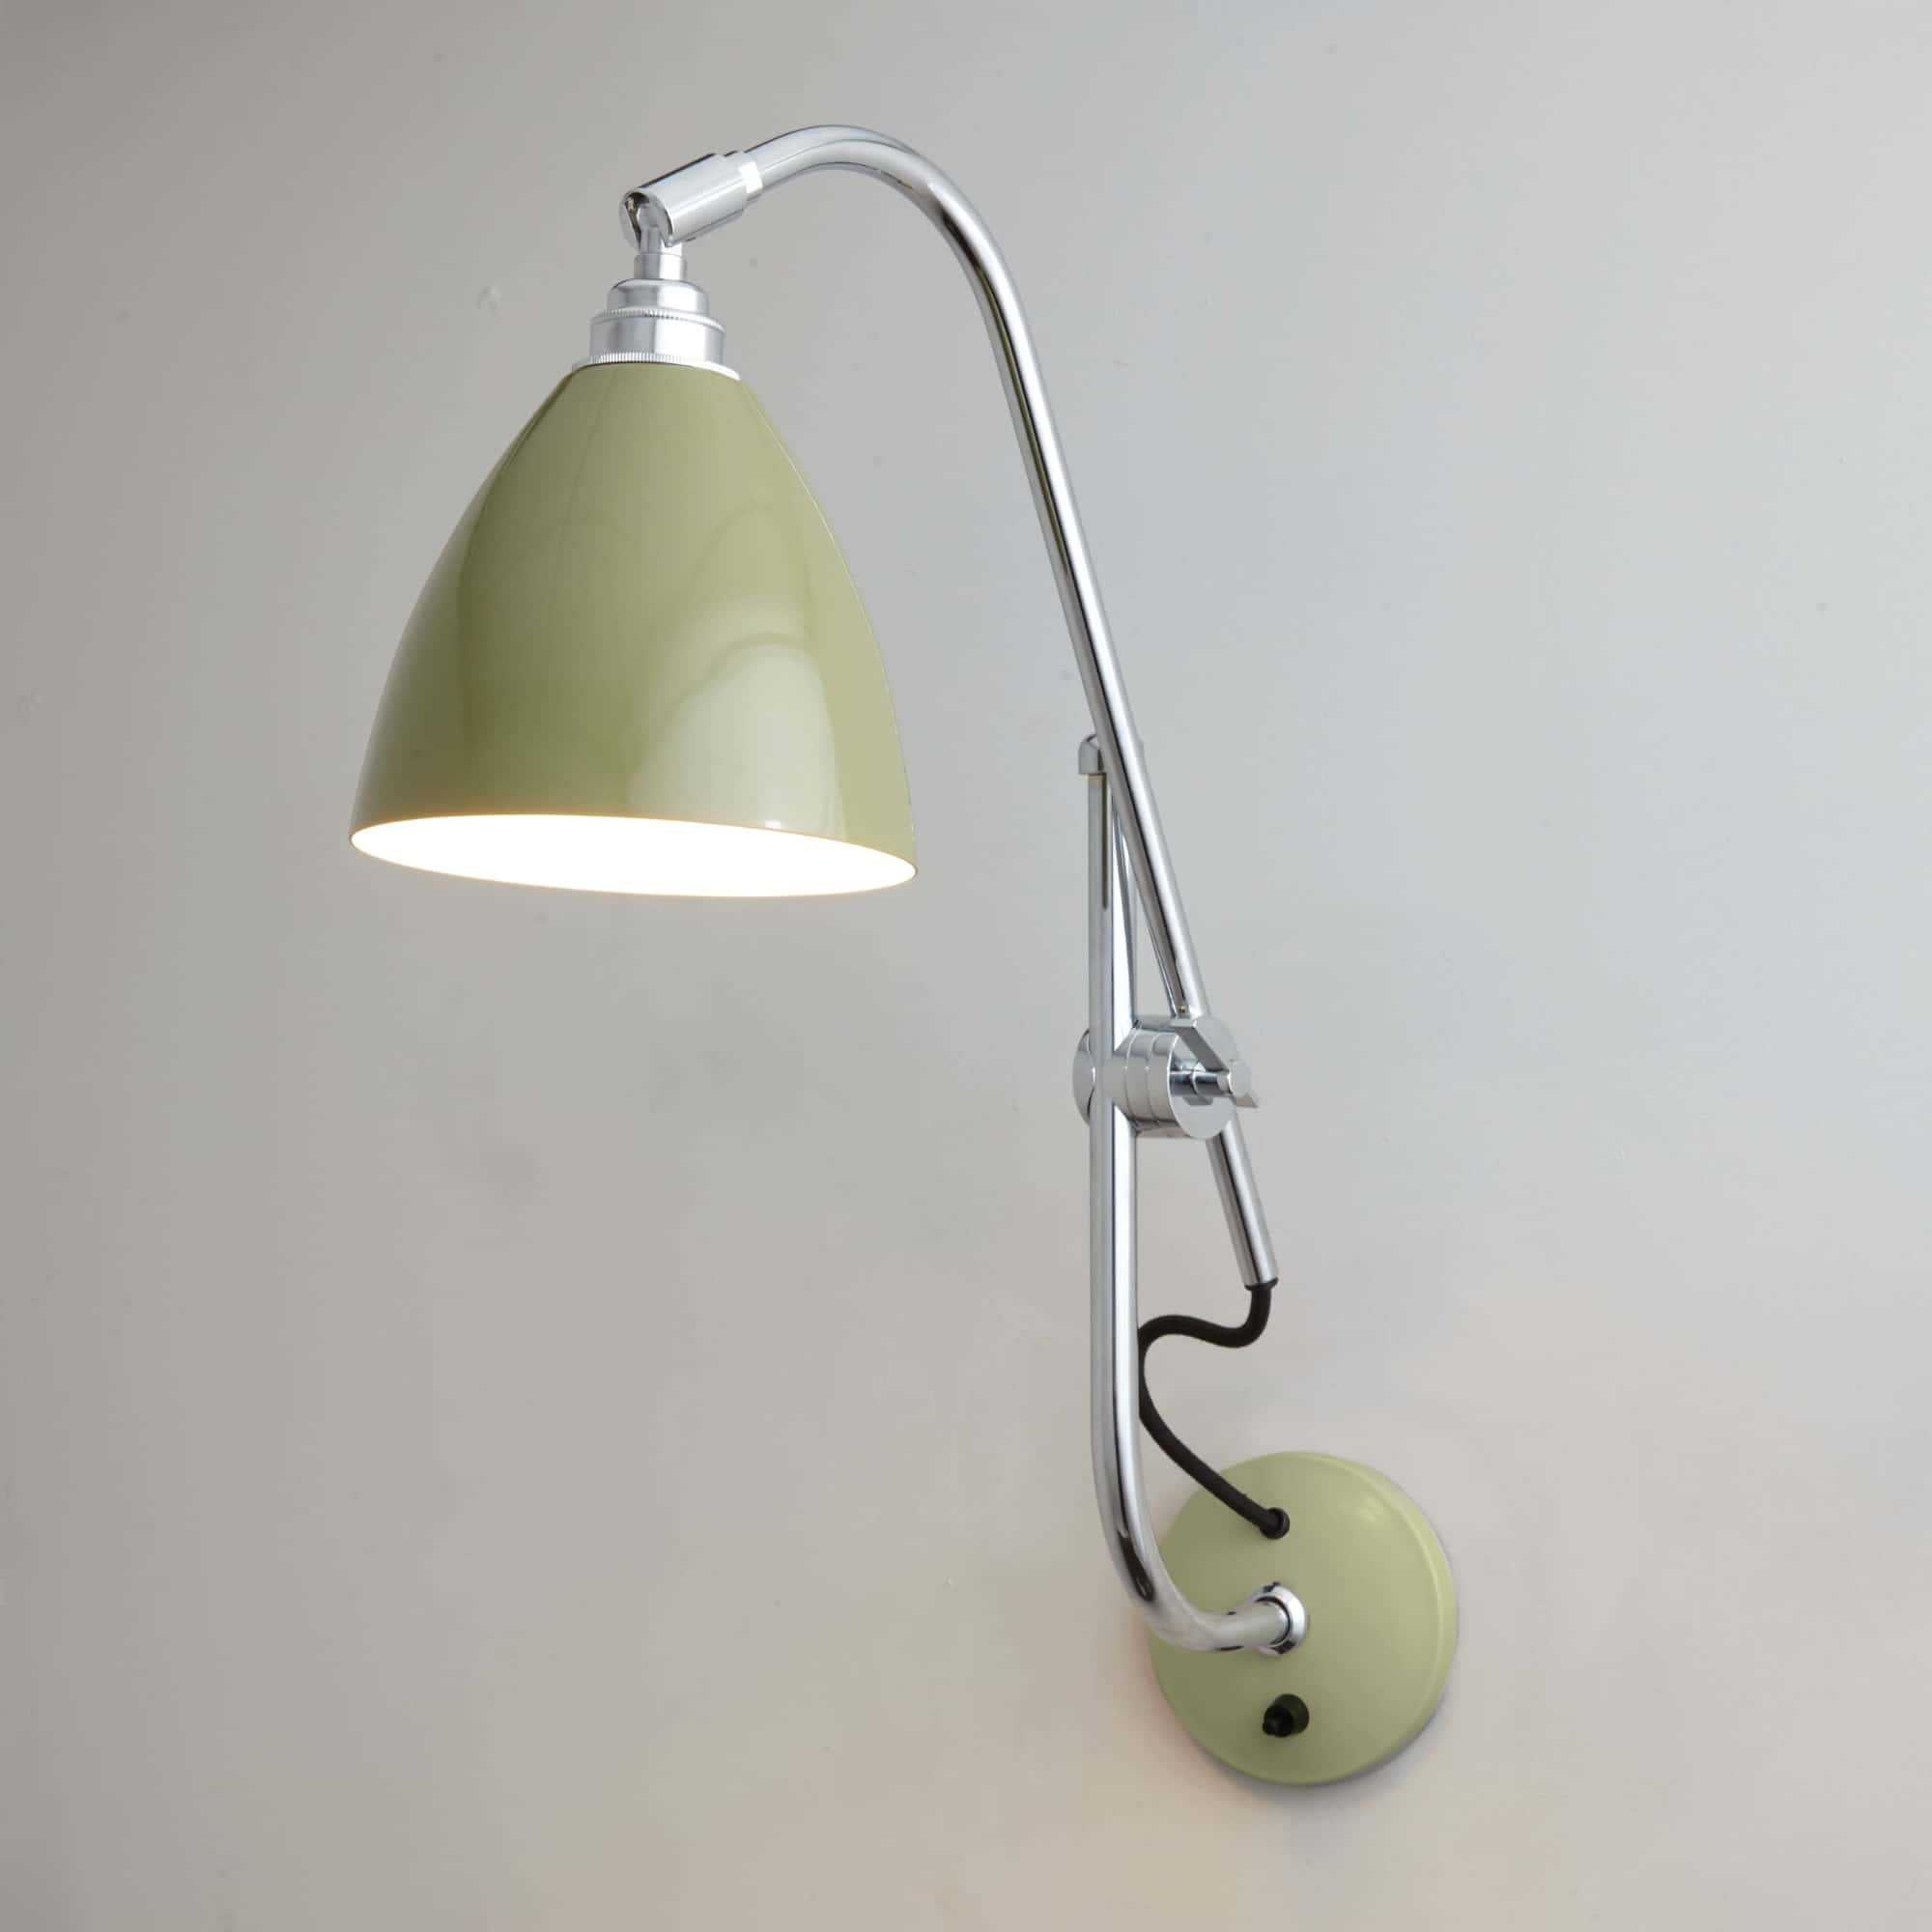 Original BTC Task Wall Lamp, Olive Green